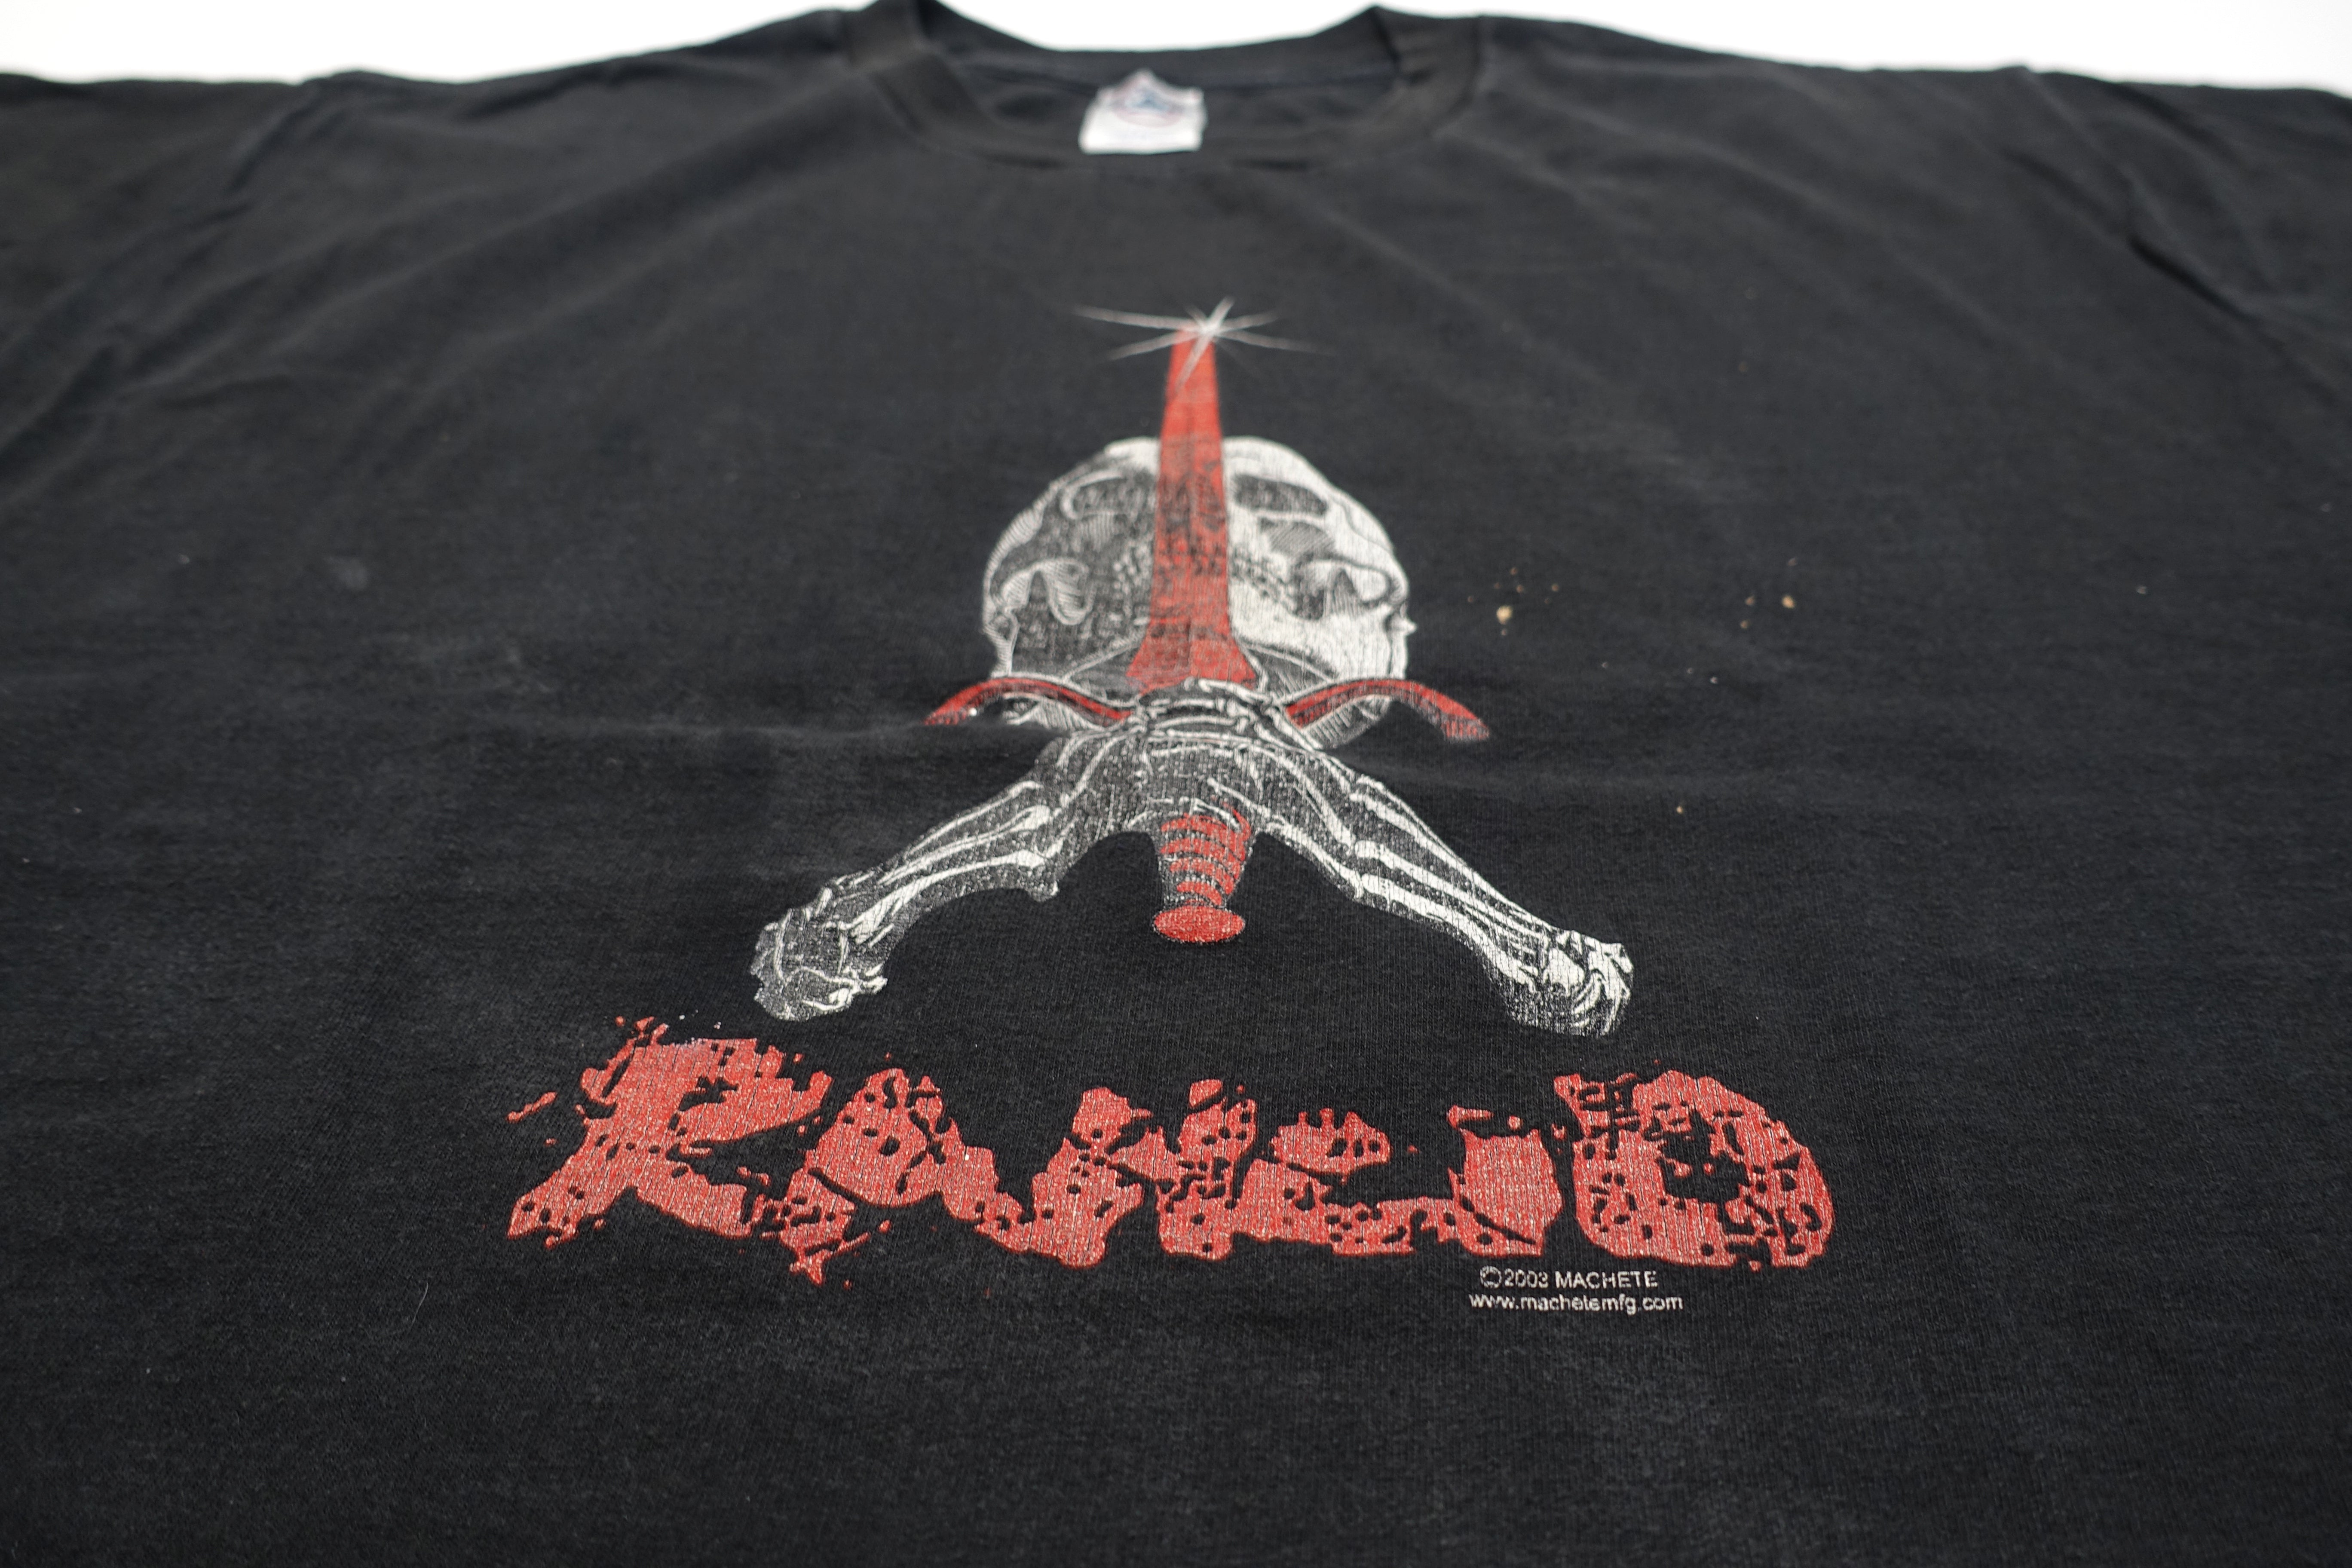 Rancid - Skull & Sword 2003 Tour Shirt Size XL